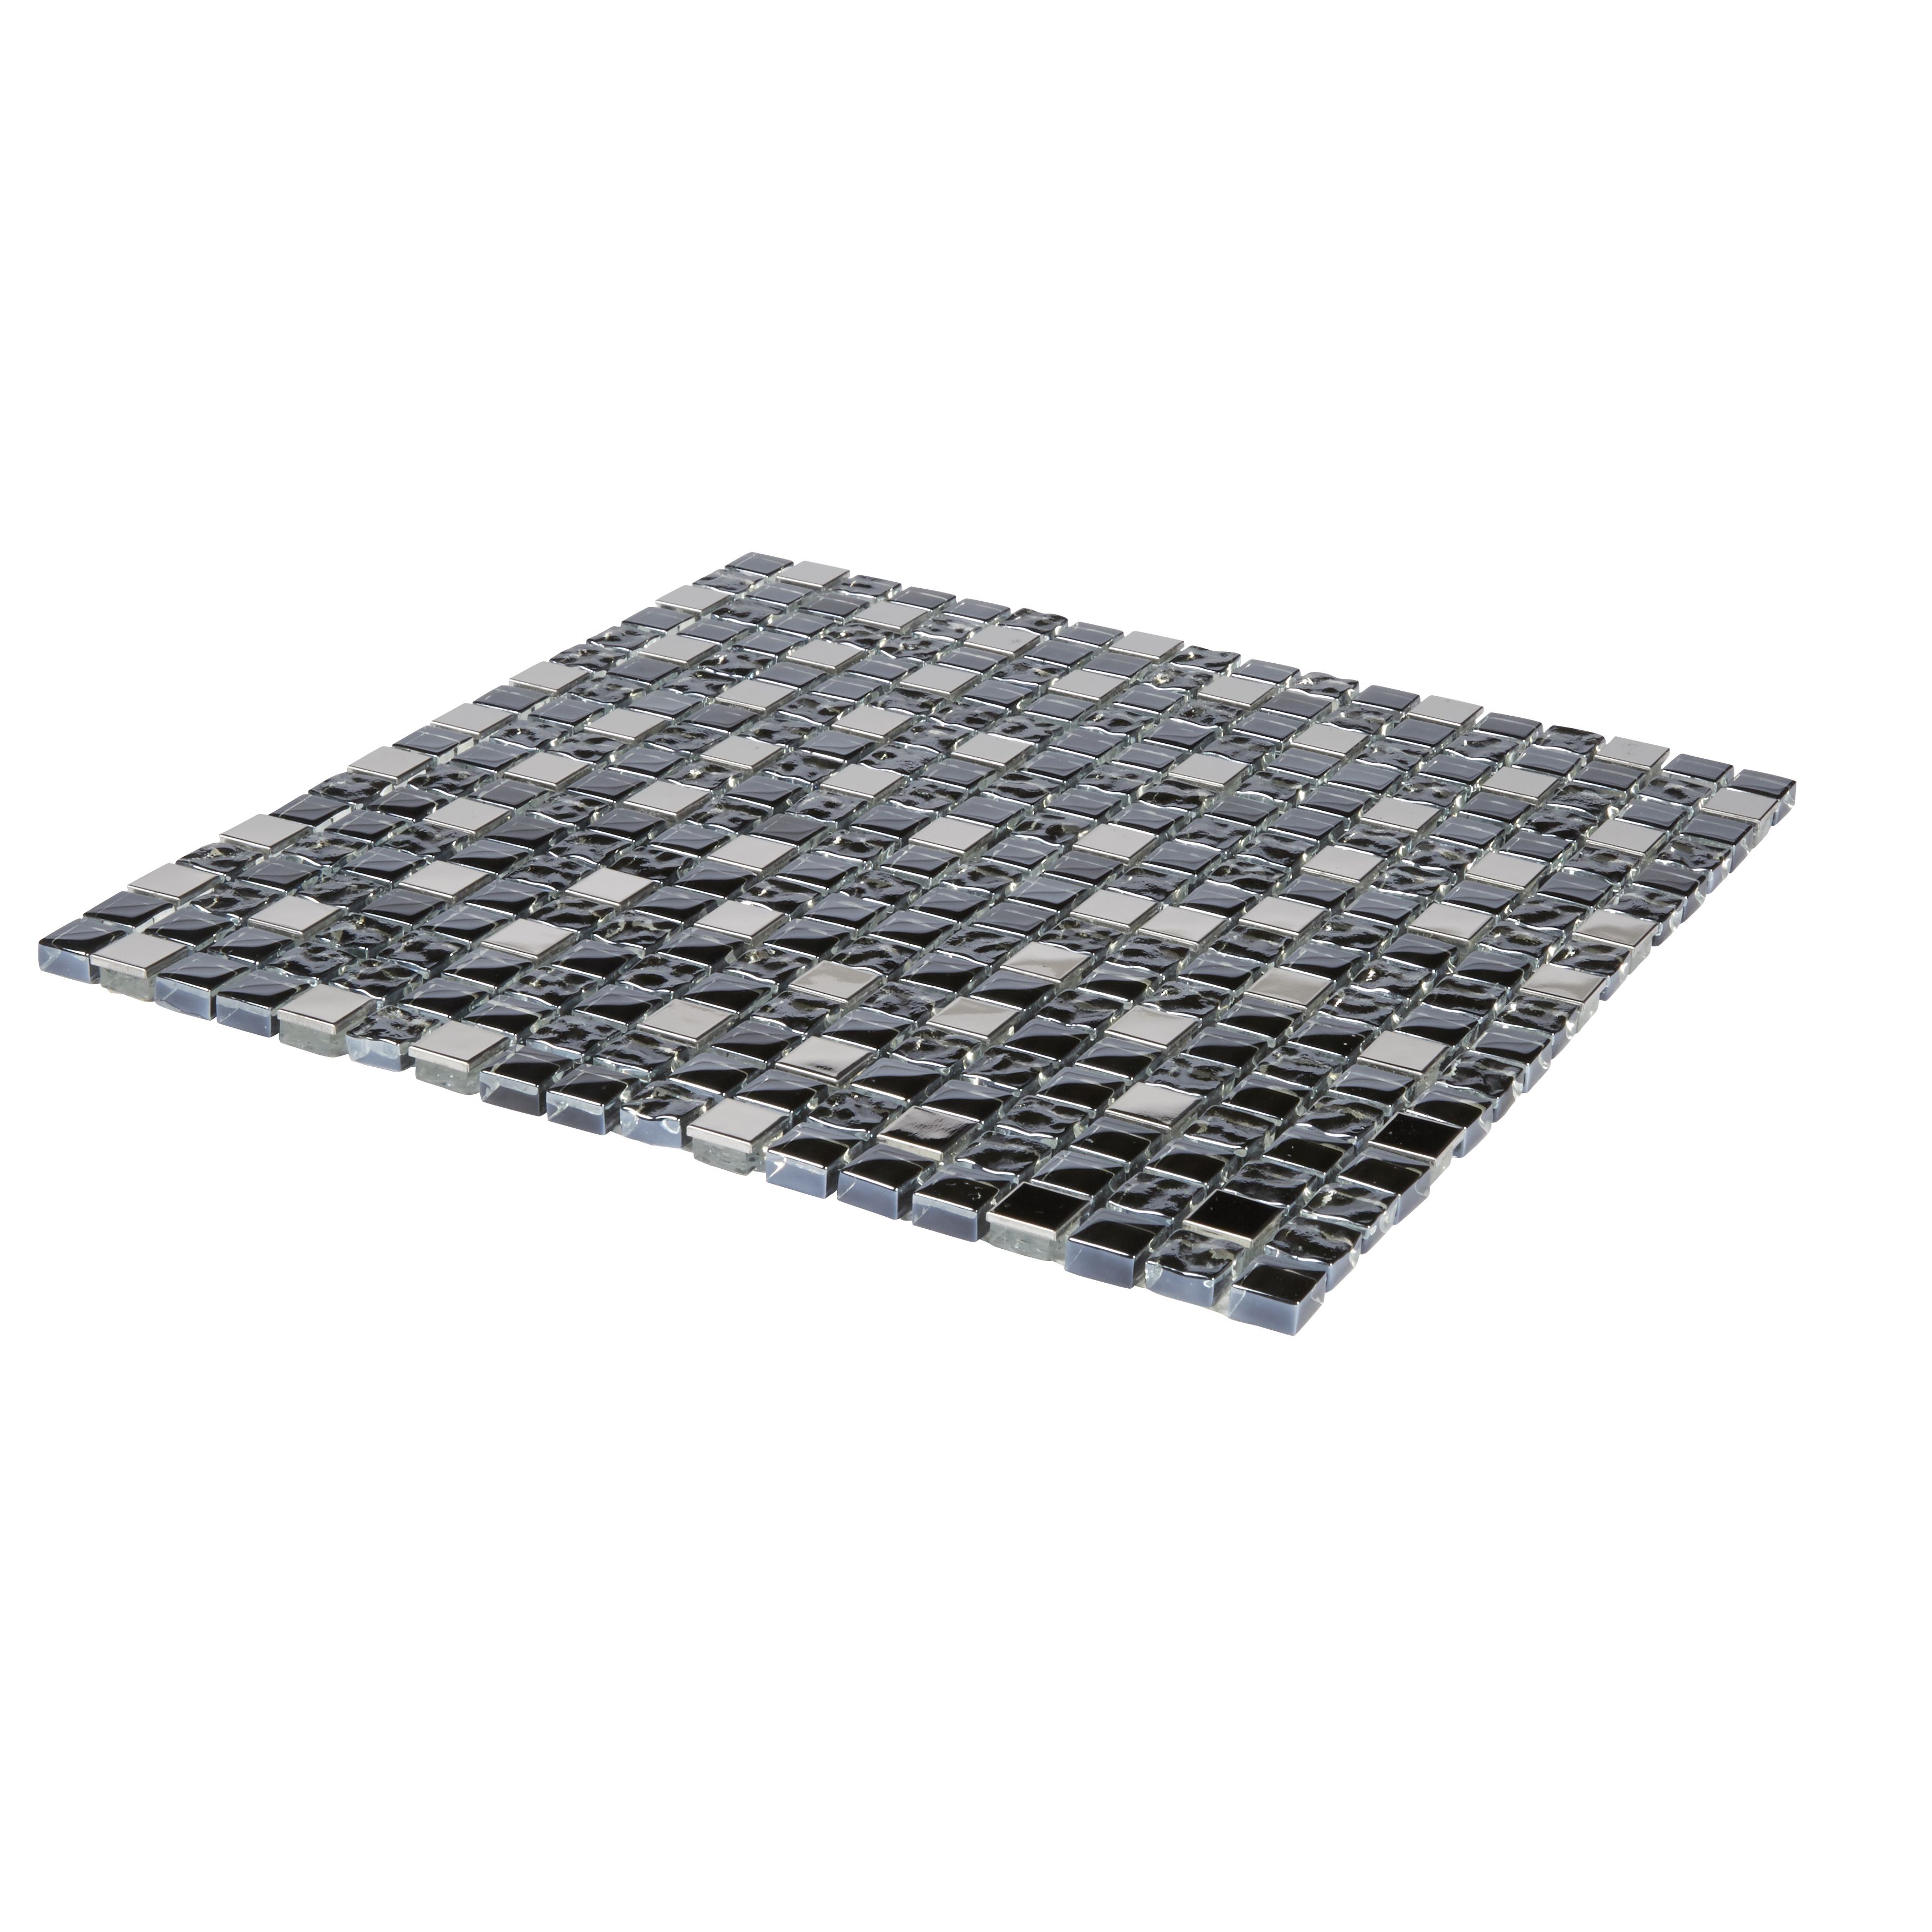 Milaino Black & grey Mosaic tile (L)300mmGlass & stainless steel